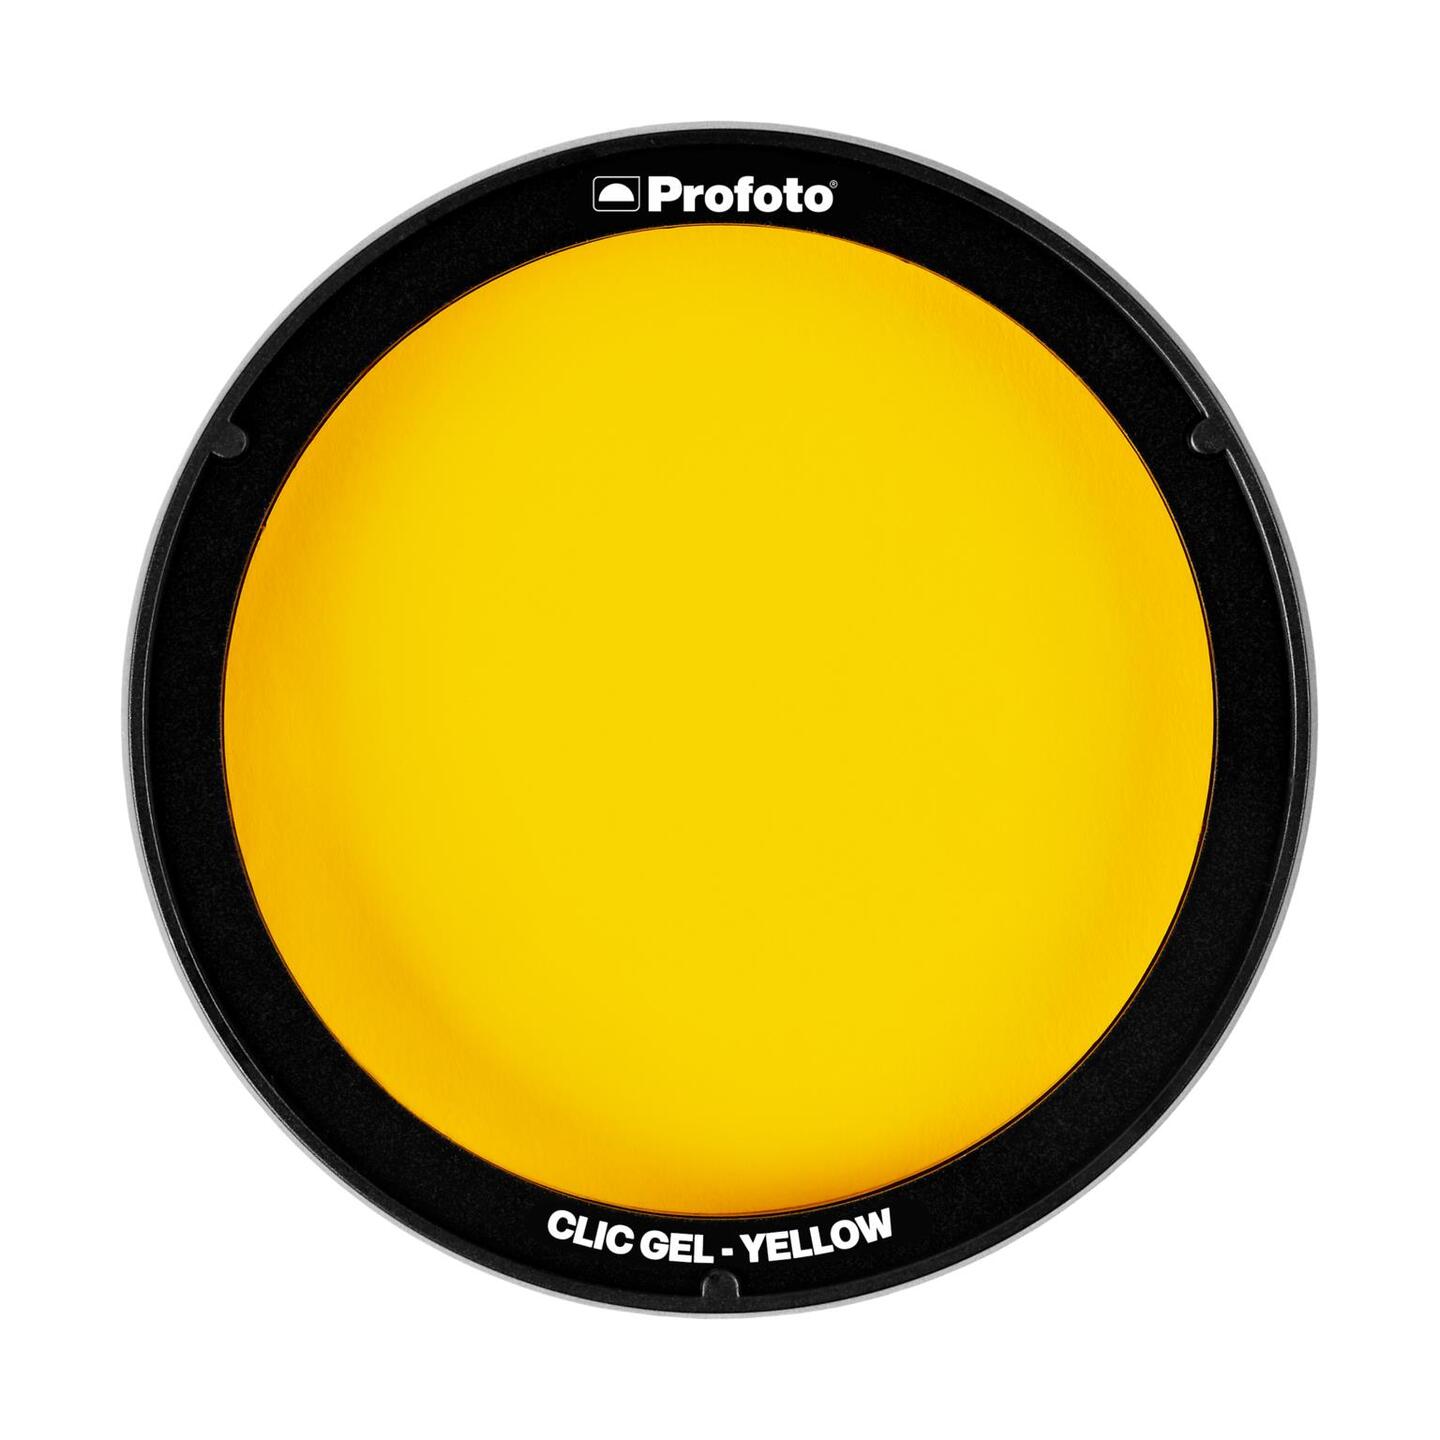 Profoto A1/C1 Clic Gel Yellow